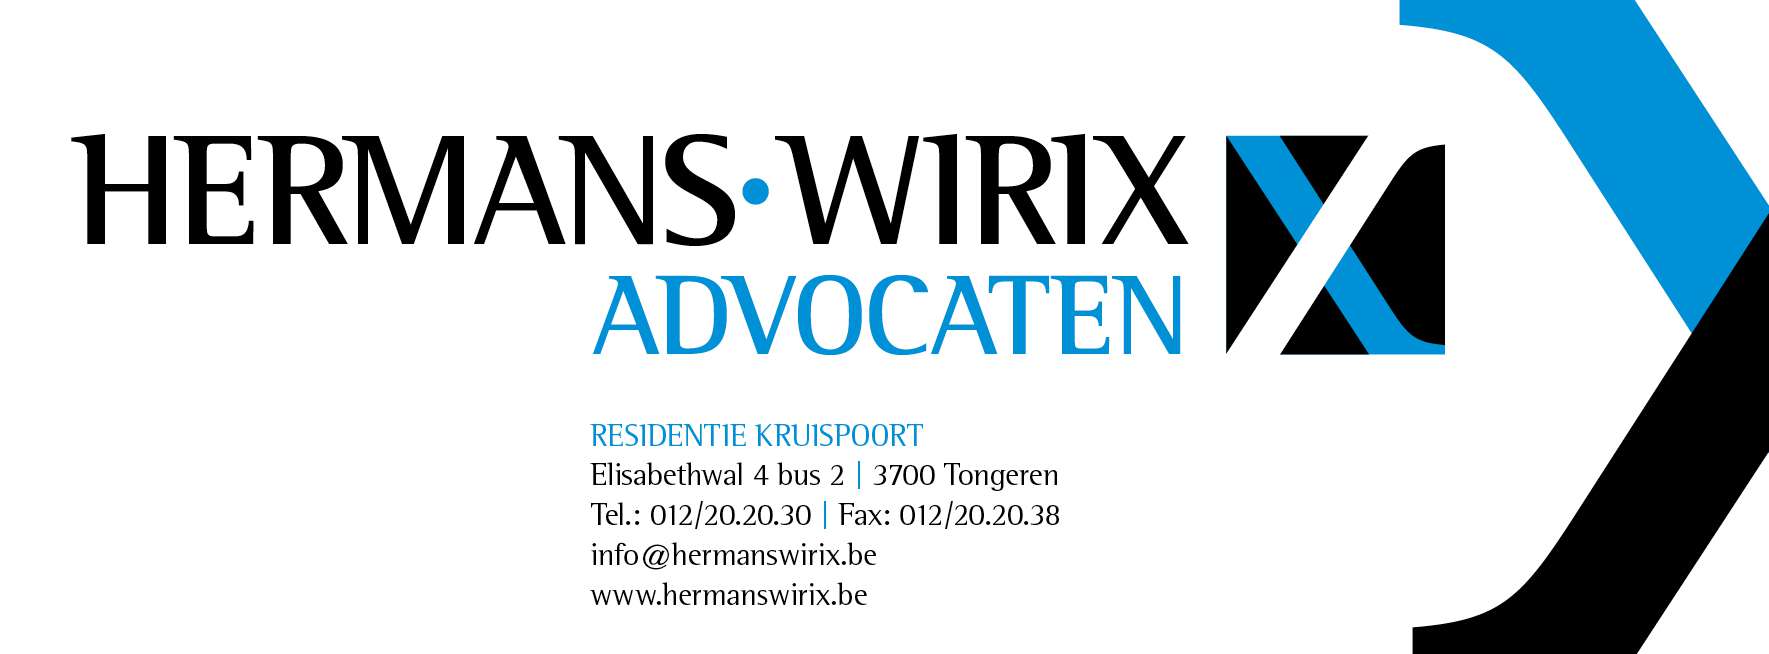 advocaten Veldwezelt Hermans-Wirix advocaten